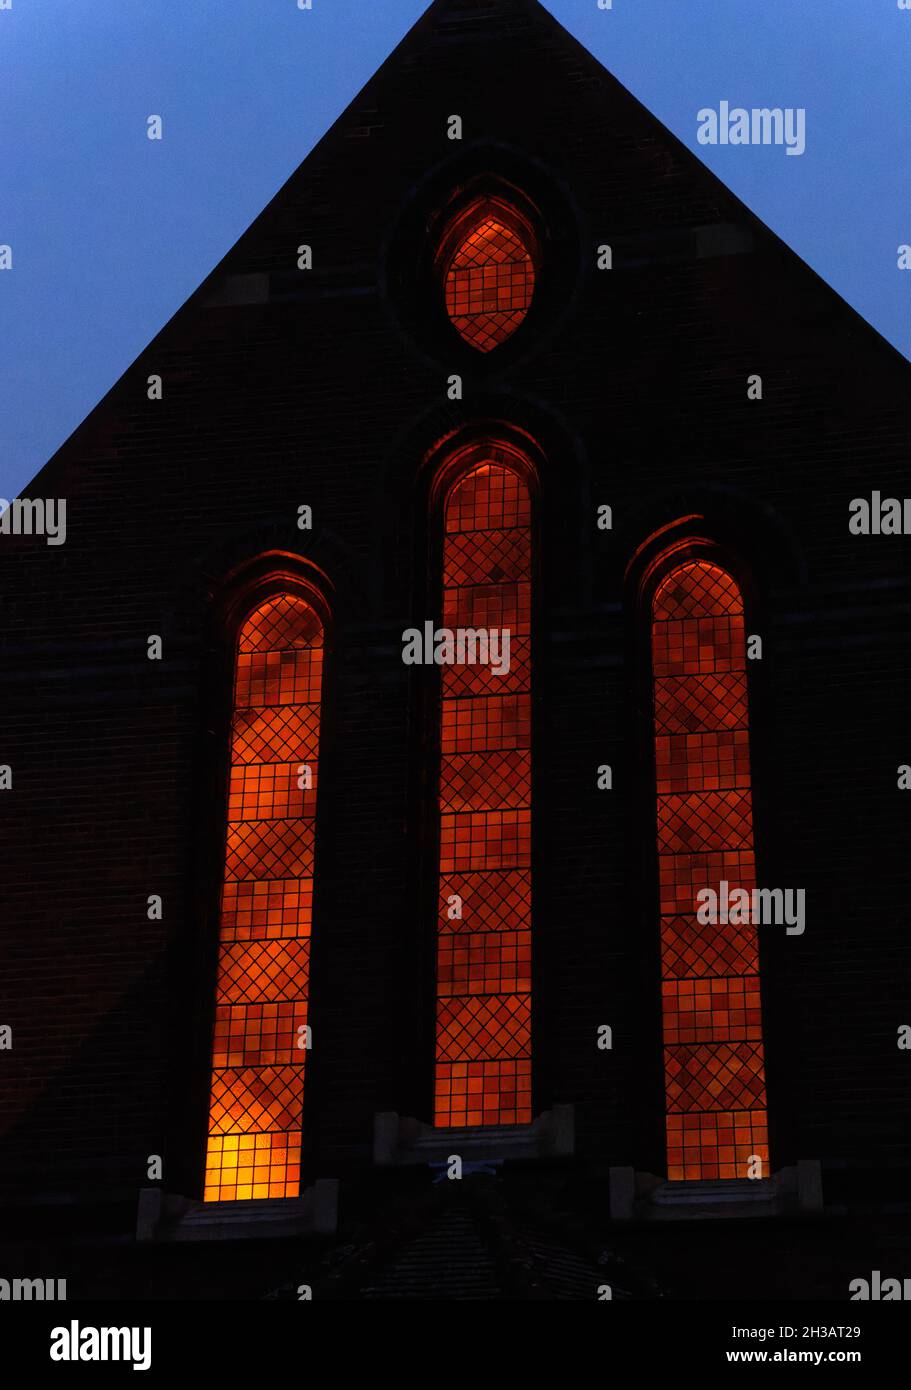 Windows of all Souls Church, St. Margarets, nachts beleuchtet, England Stockfoto